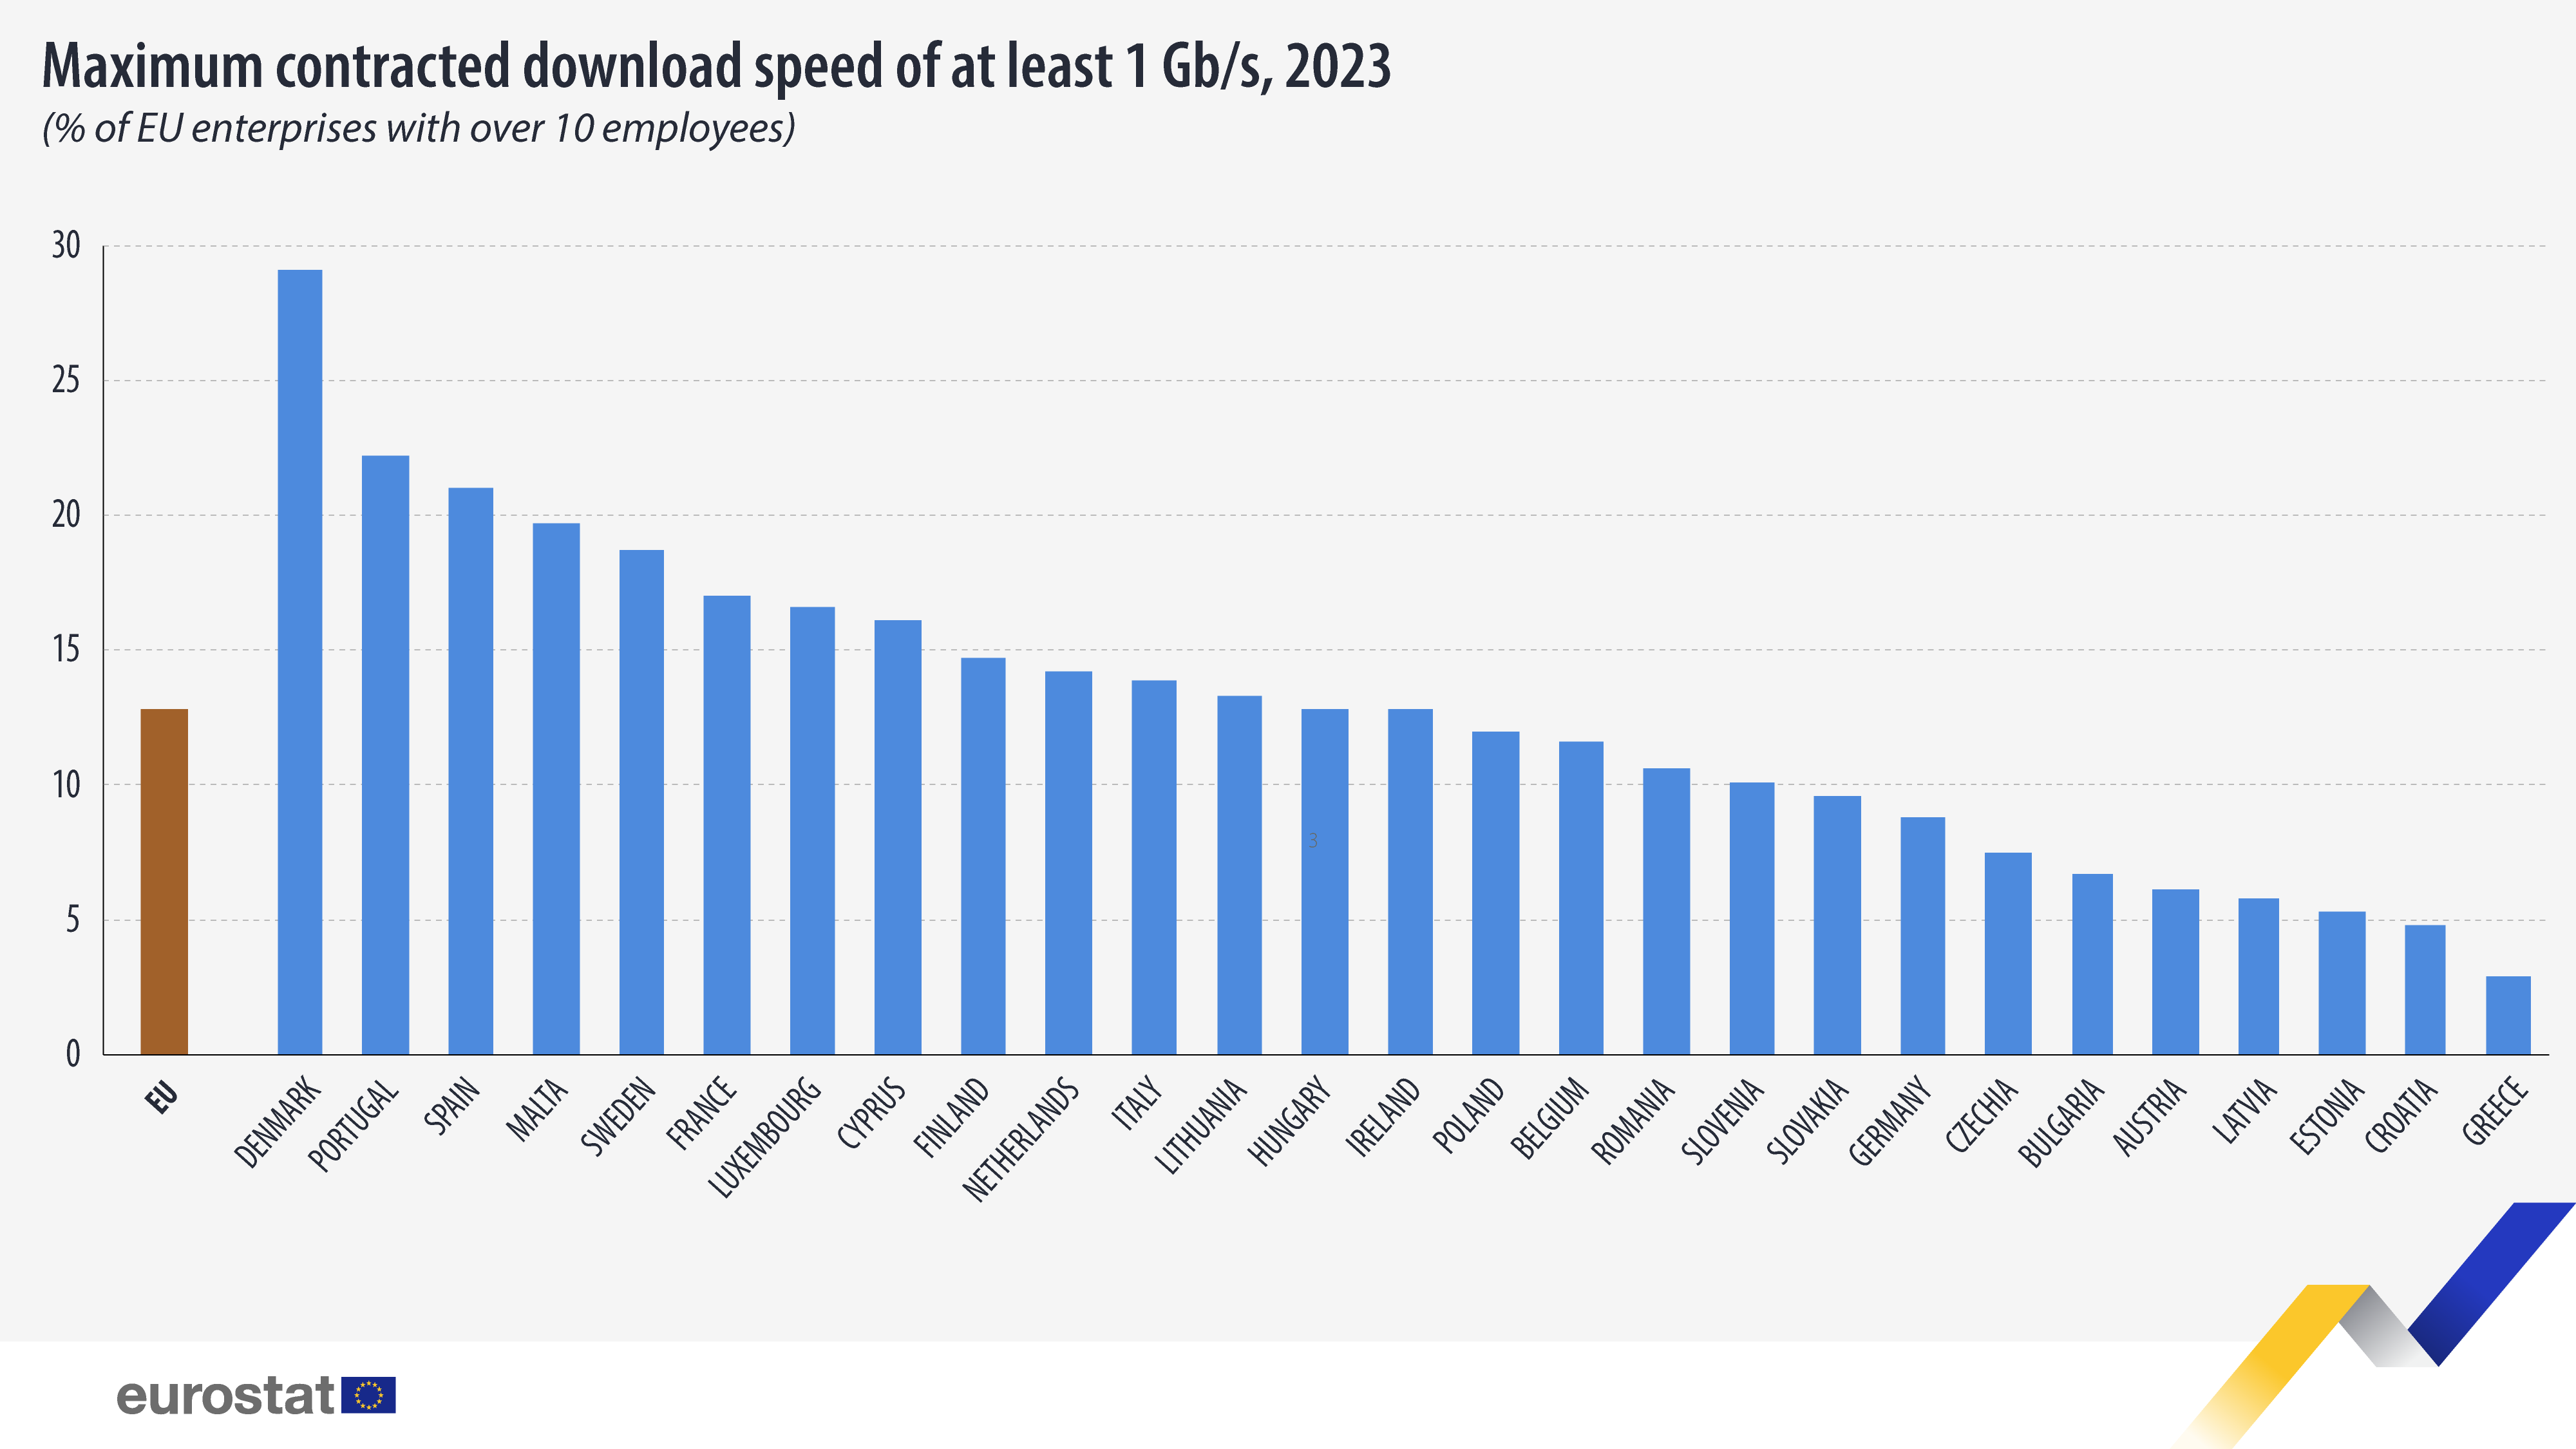 enterprise maximum contracted download speed